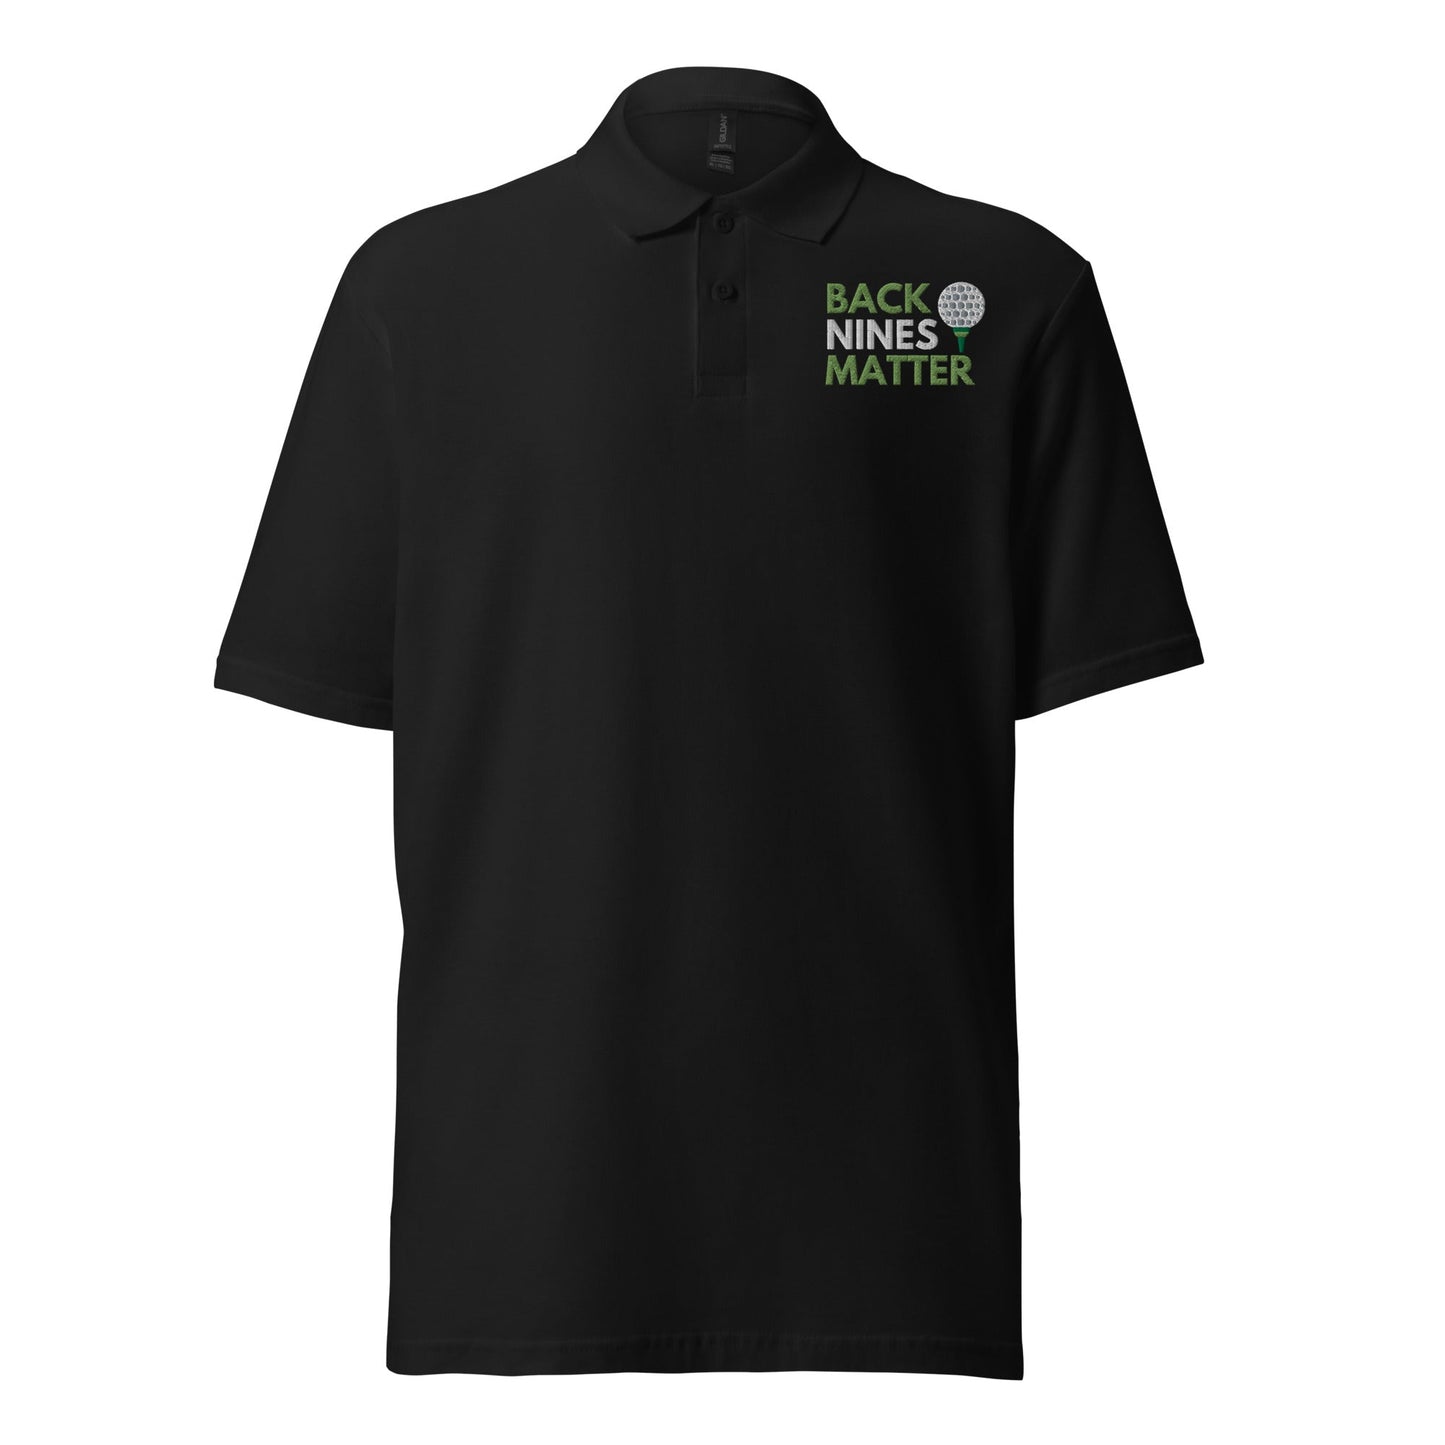 Funny Golfer Gifts  Polo Shirt Black / S Back Nines Matter Unisex Pique Polo Shirt